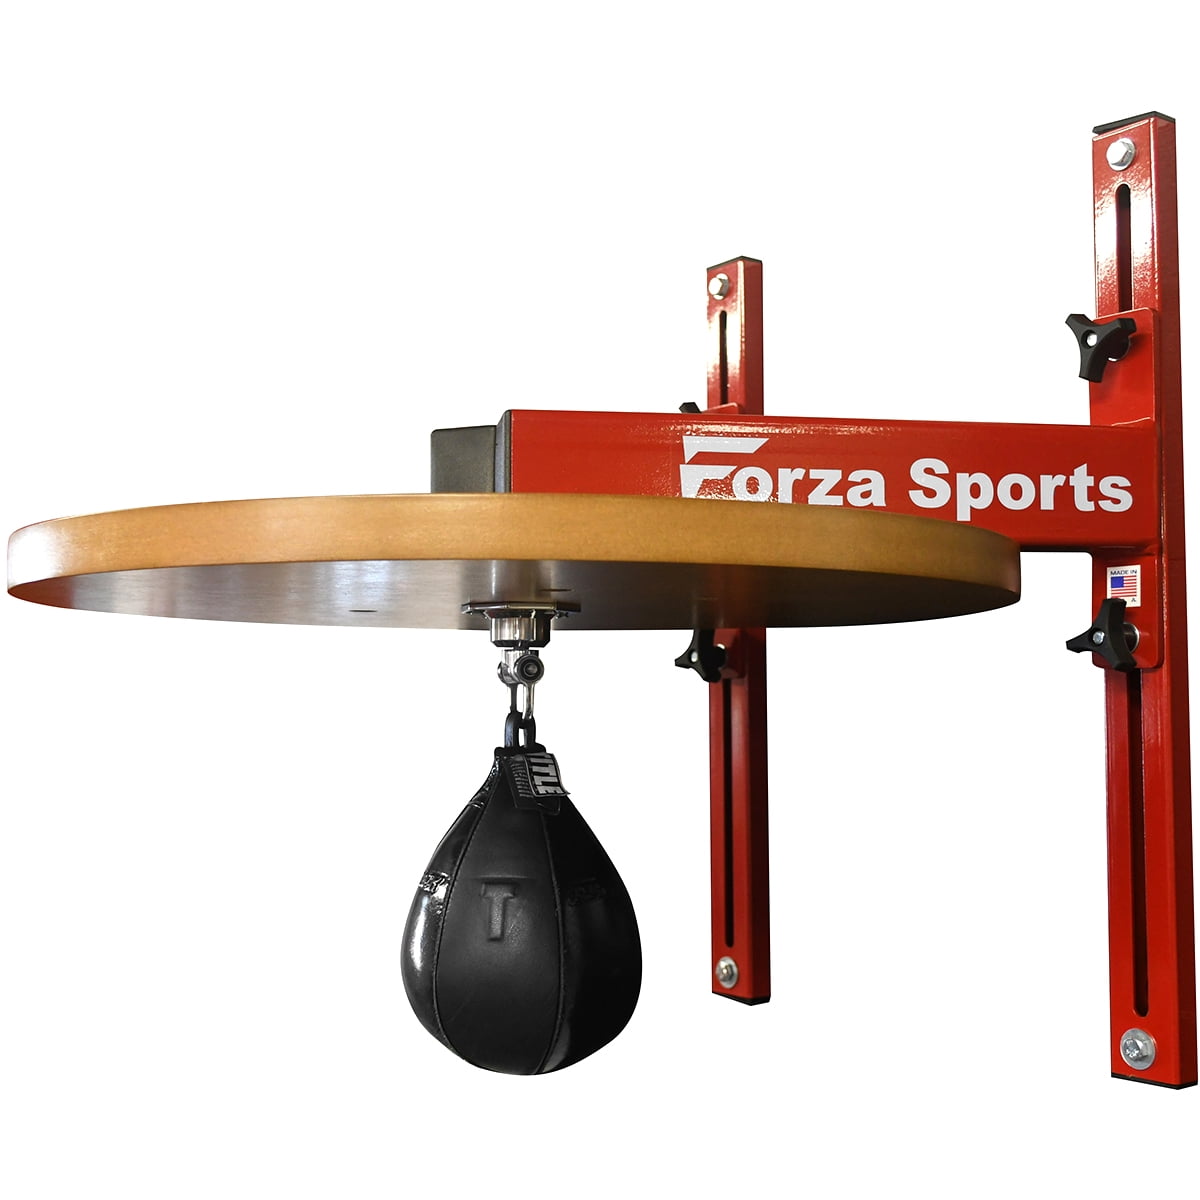 Forza Sports Speed Bag Platform with Hypersonic Swivel - comicsahoy.com - comicsahoy.com